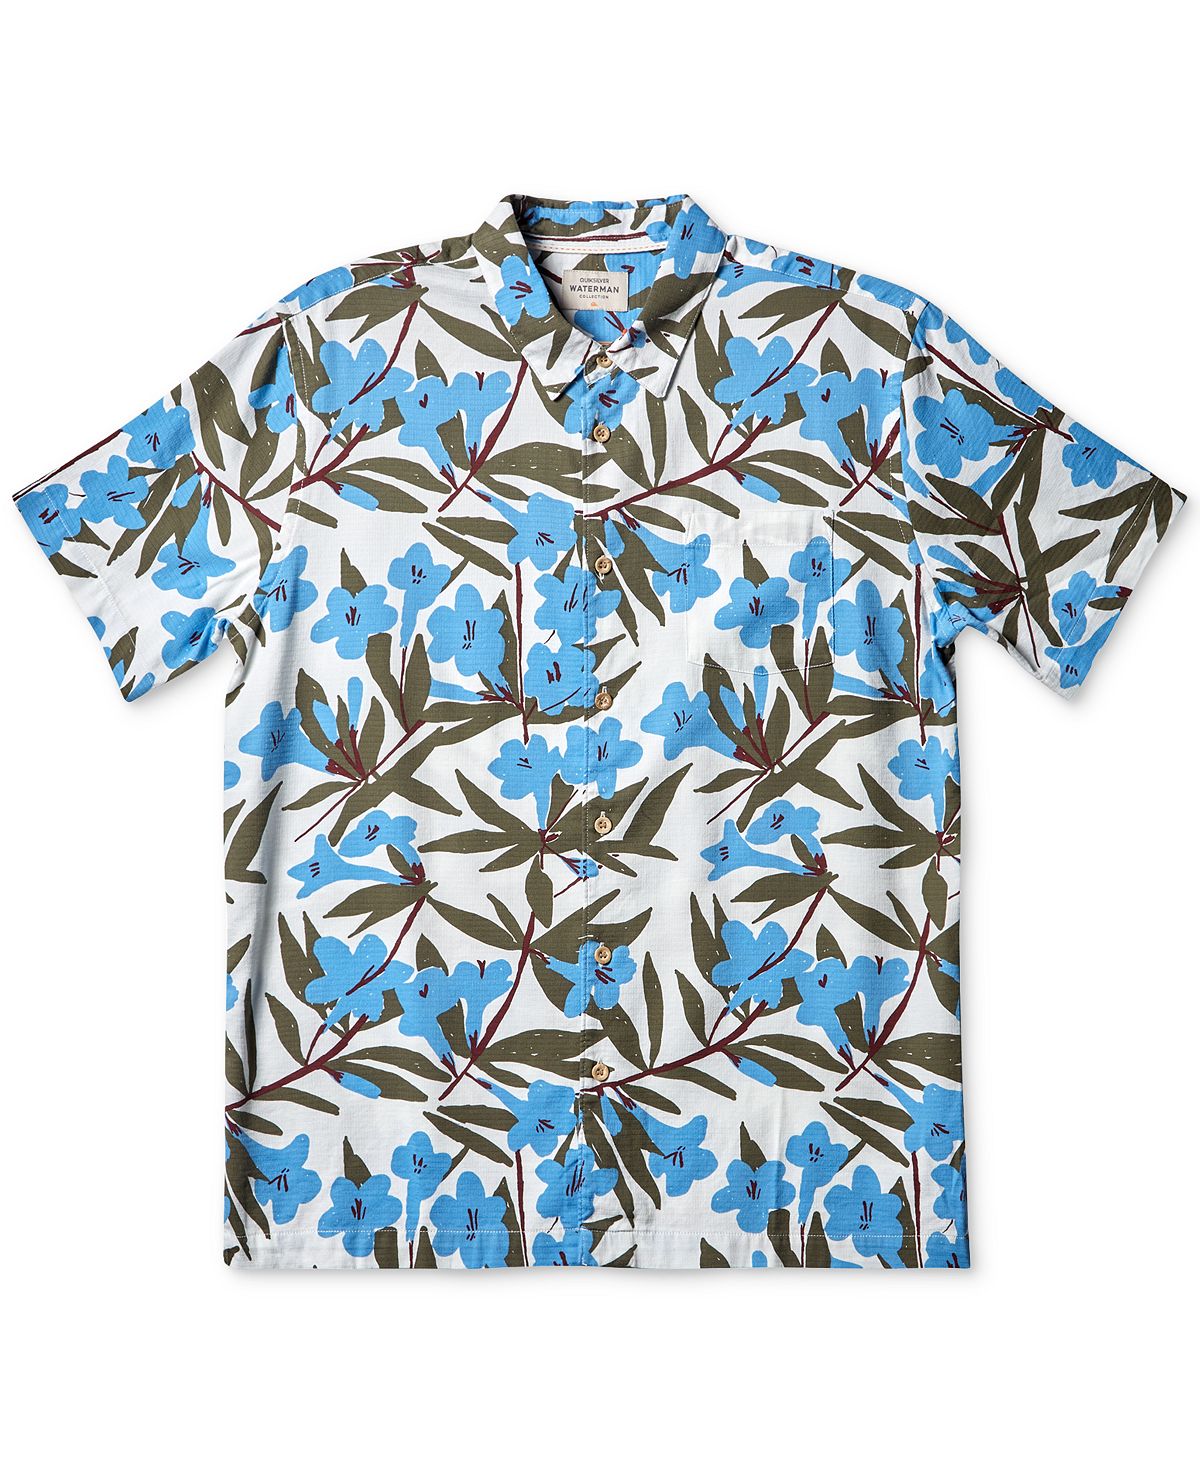 Мужская рубашка с тропическим принтом Quiksilver Quiksilver Waterman цена и фото